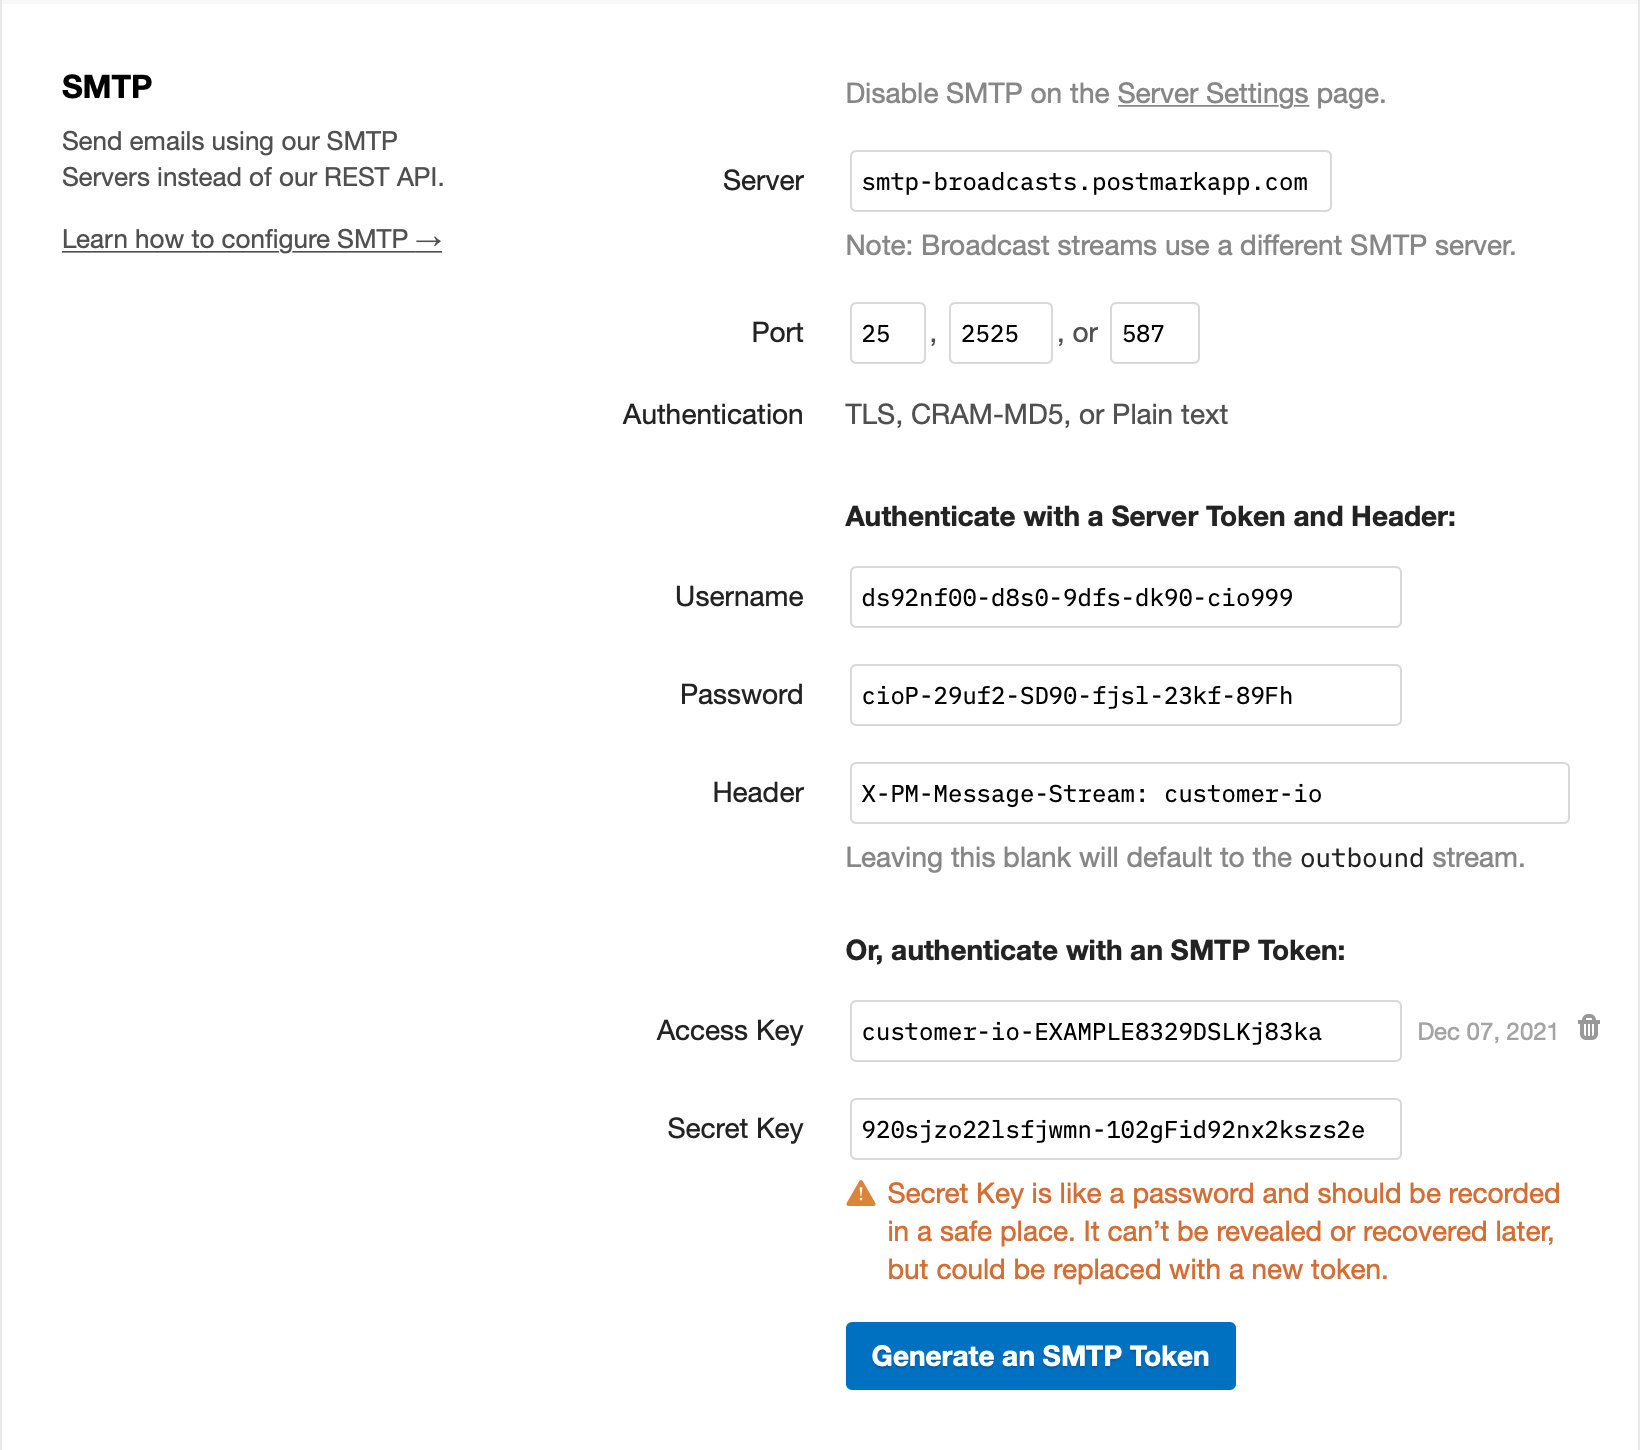 Find your SMTP credentials